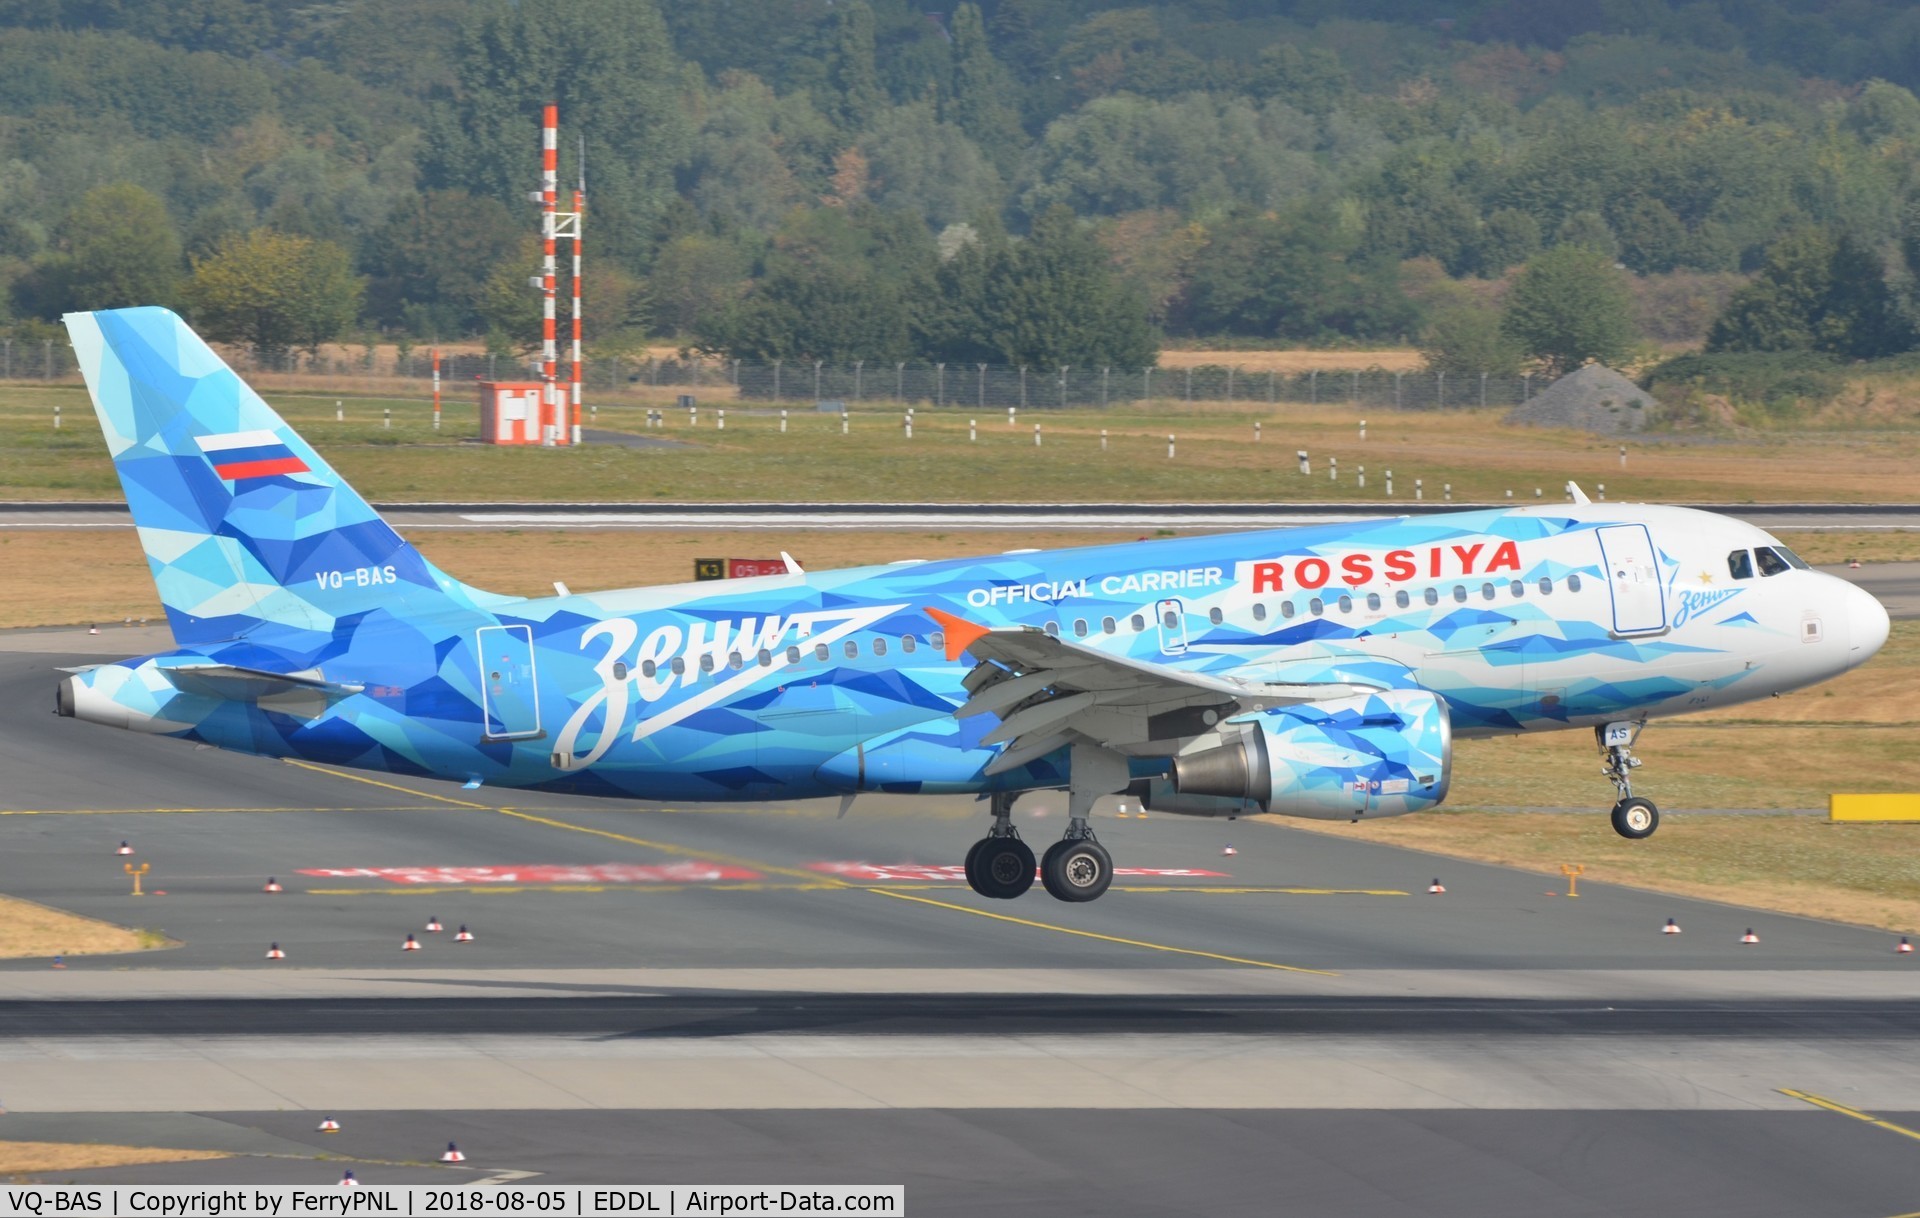 VQ-BAS, 2002 Airbus A319-111 C/N 1863, Rossiya A319 promoting Zenit soccer team